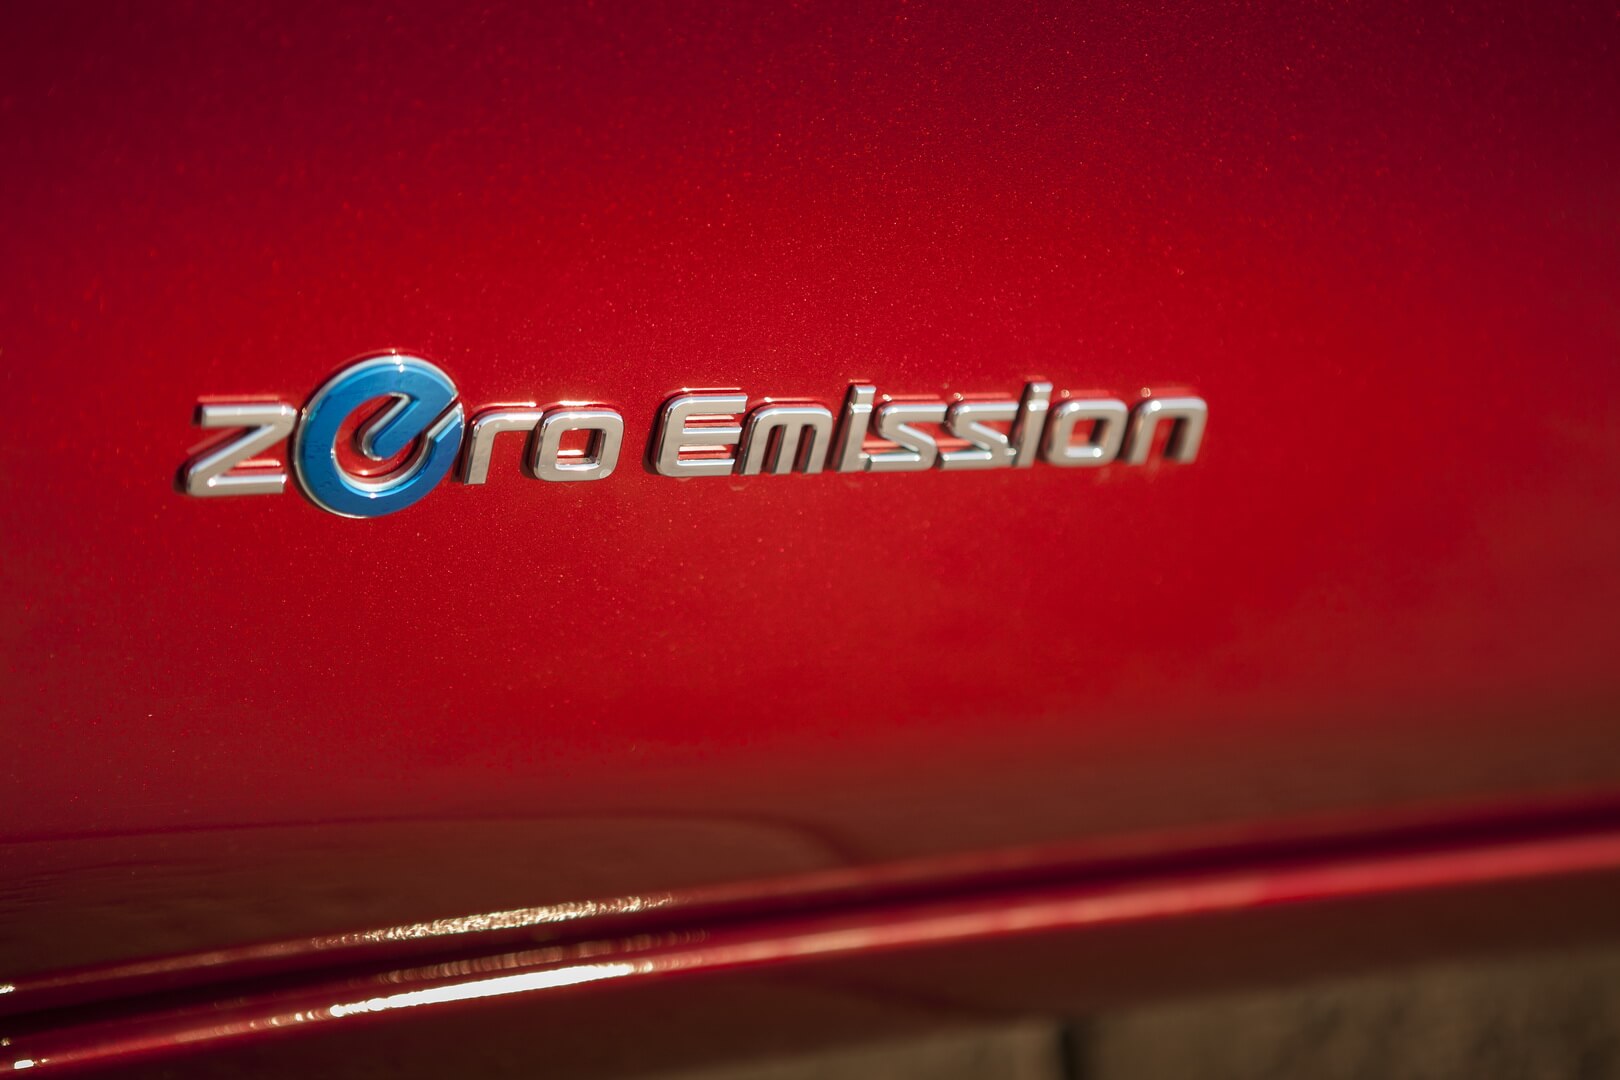 Фотография экоавто Nissan Leaf 2013 (24 кВт•ч) - фото 6